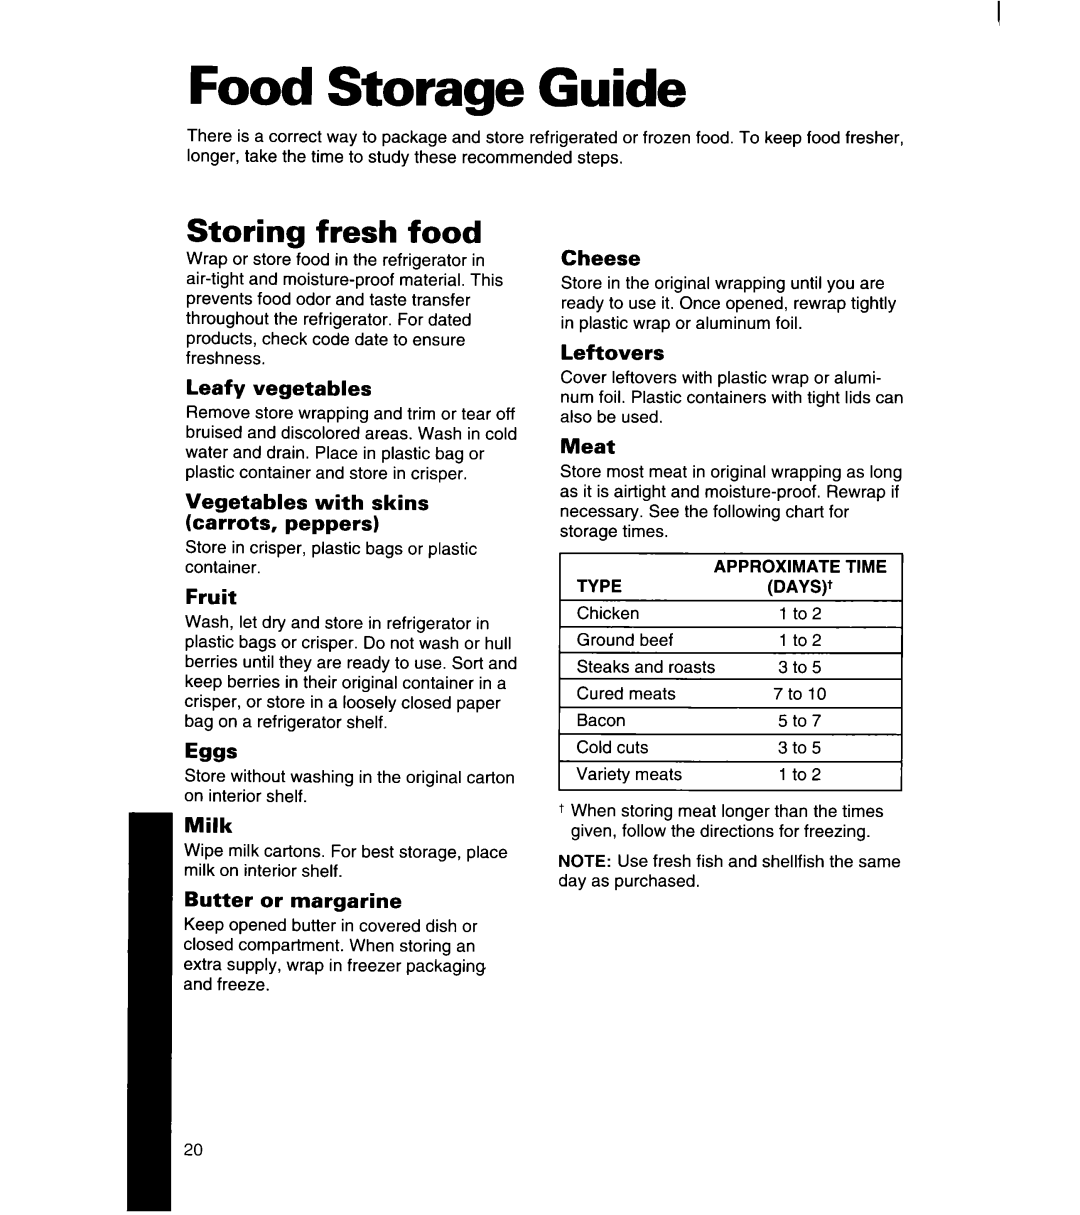 Whirlpool 8ET22DK Food Storage Guide, Storing fresh food, Leafy vegetables, Vegetables with skins carrots, peppers, Fruit 